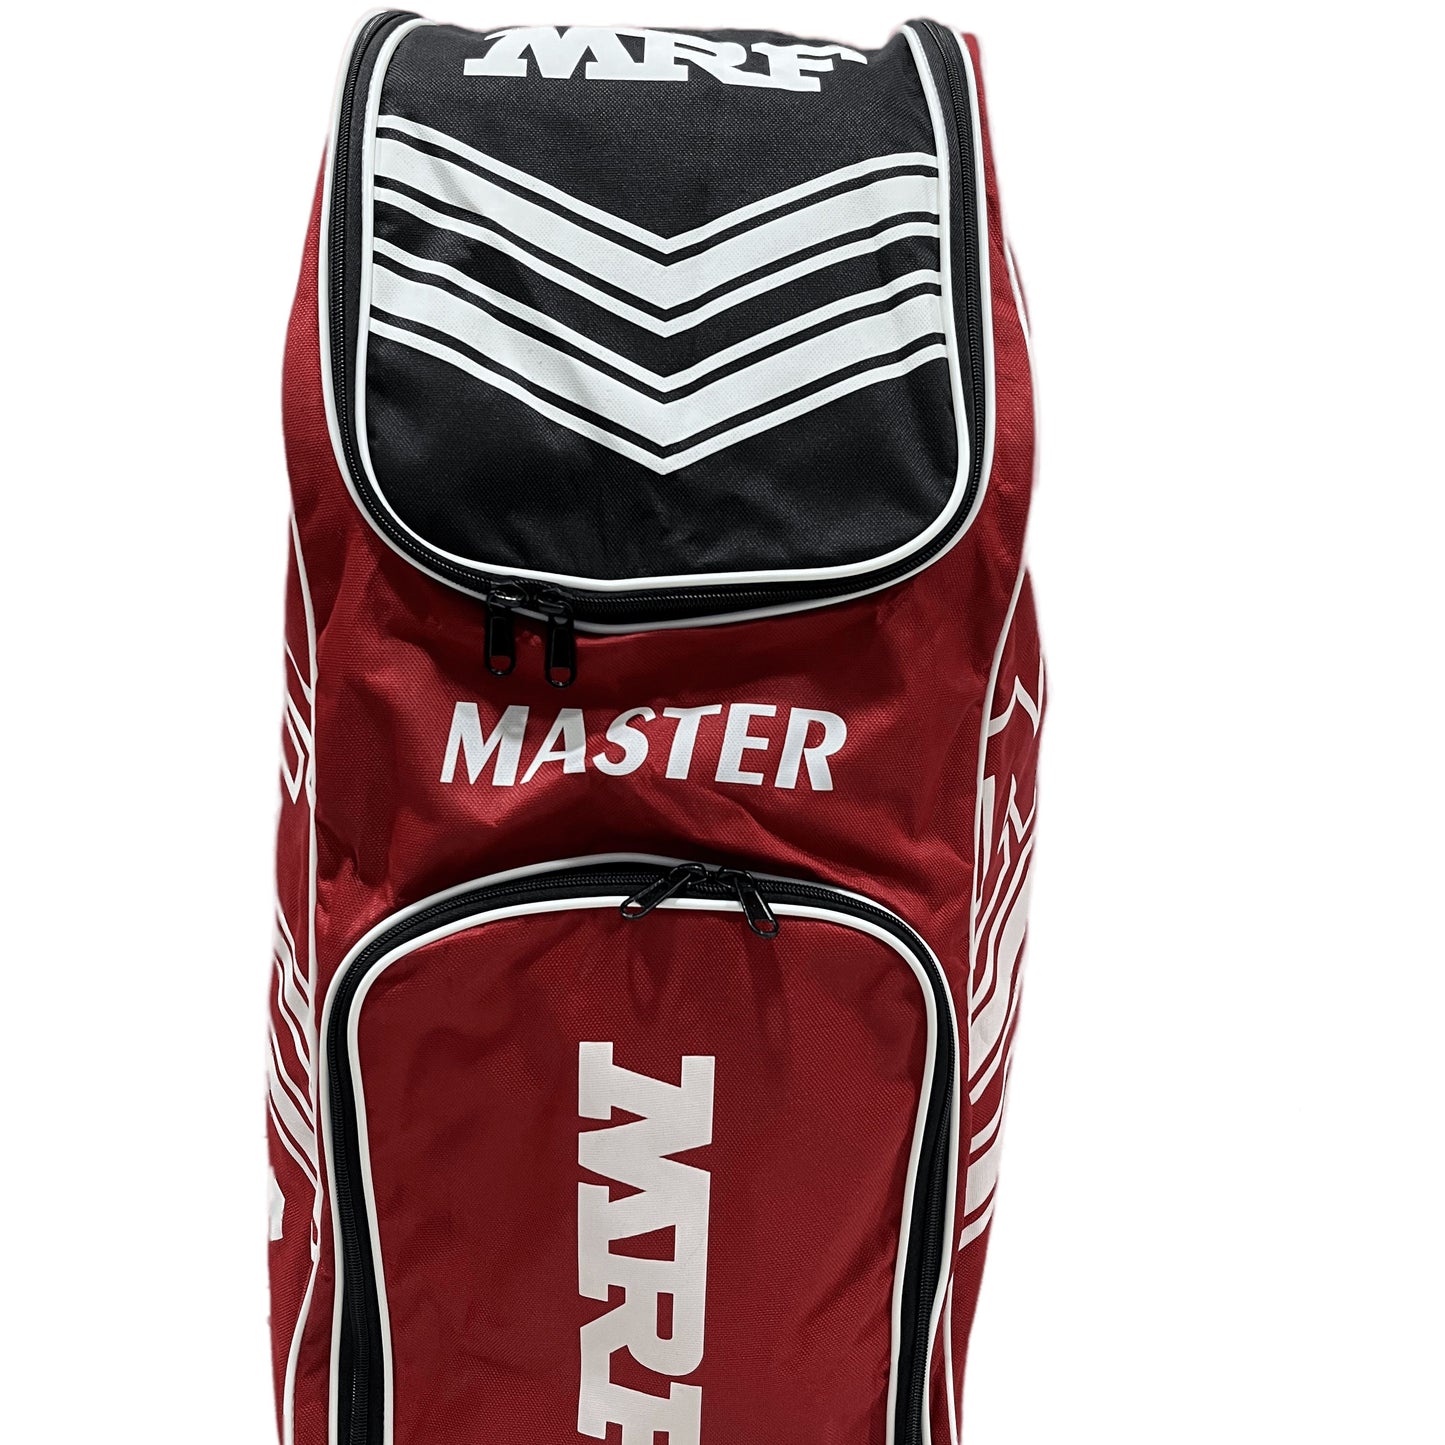 MRF Master Junior Cricket Kit Bag with wheels